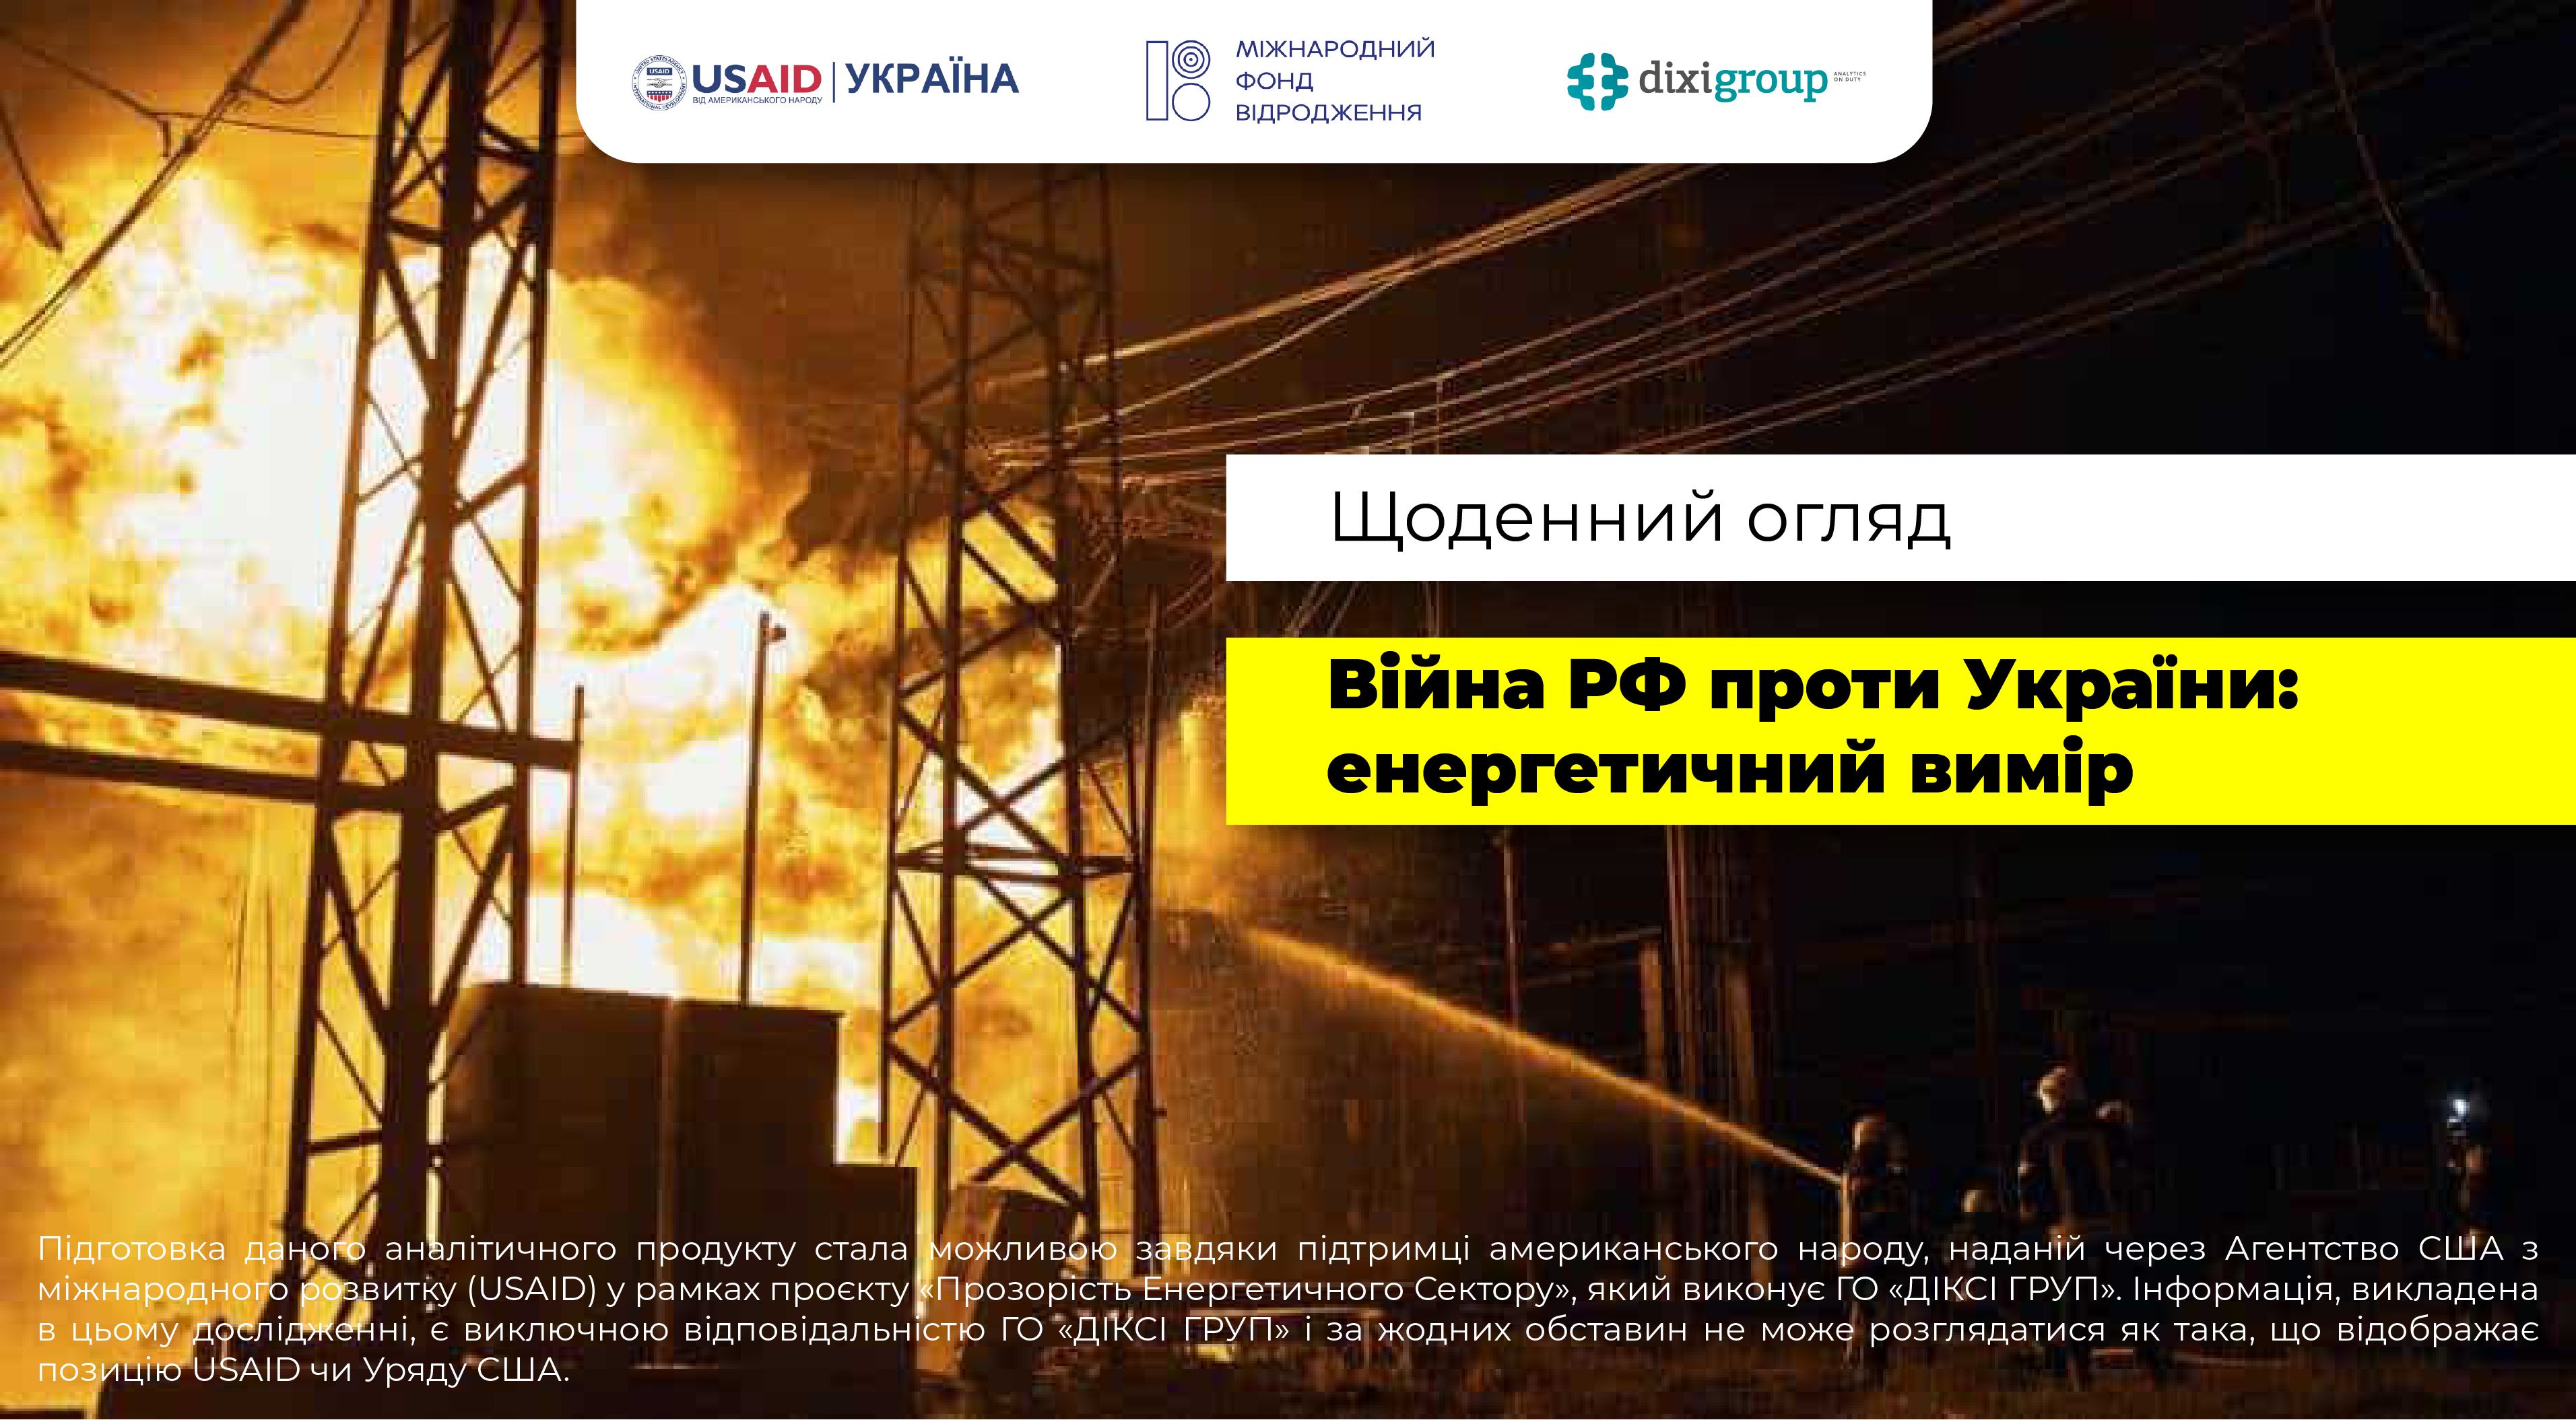 Russian War Against Ukraine: Energy Dimension (DiXi Group alert) – March 21